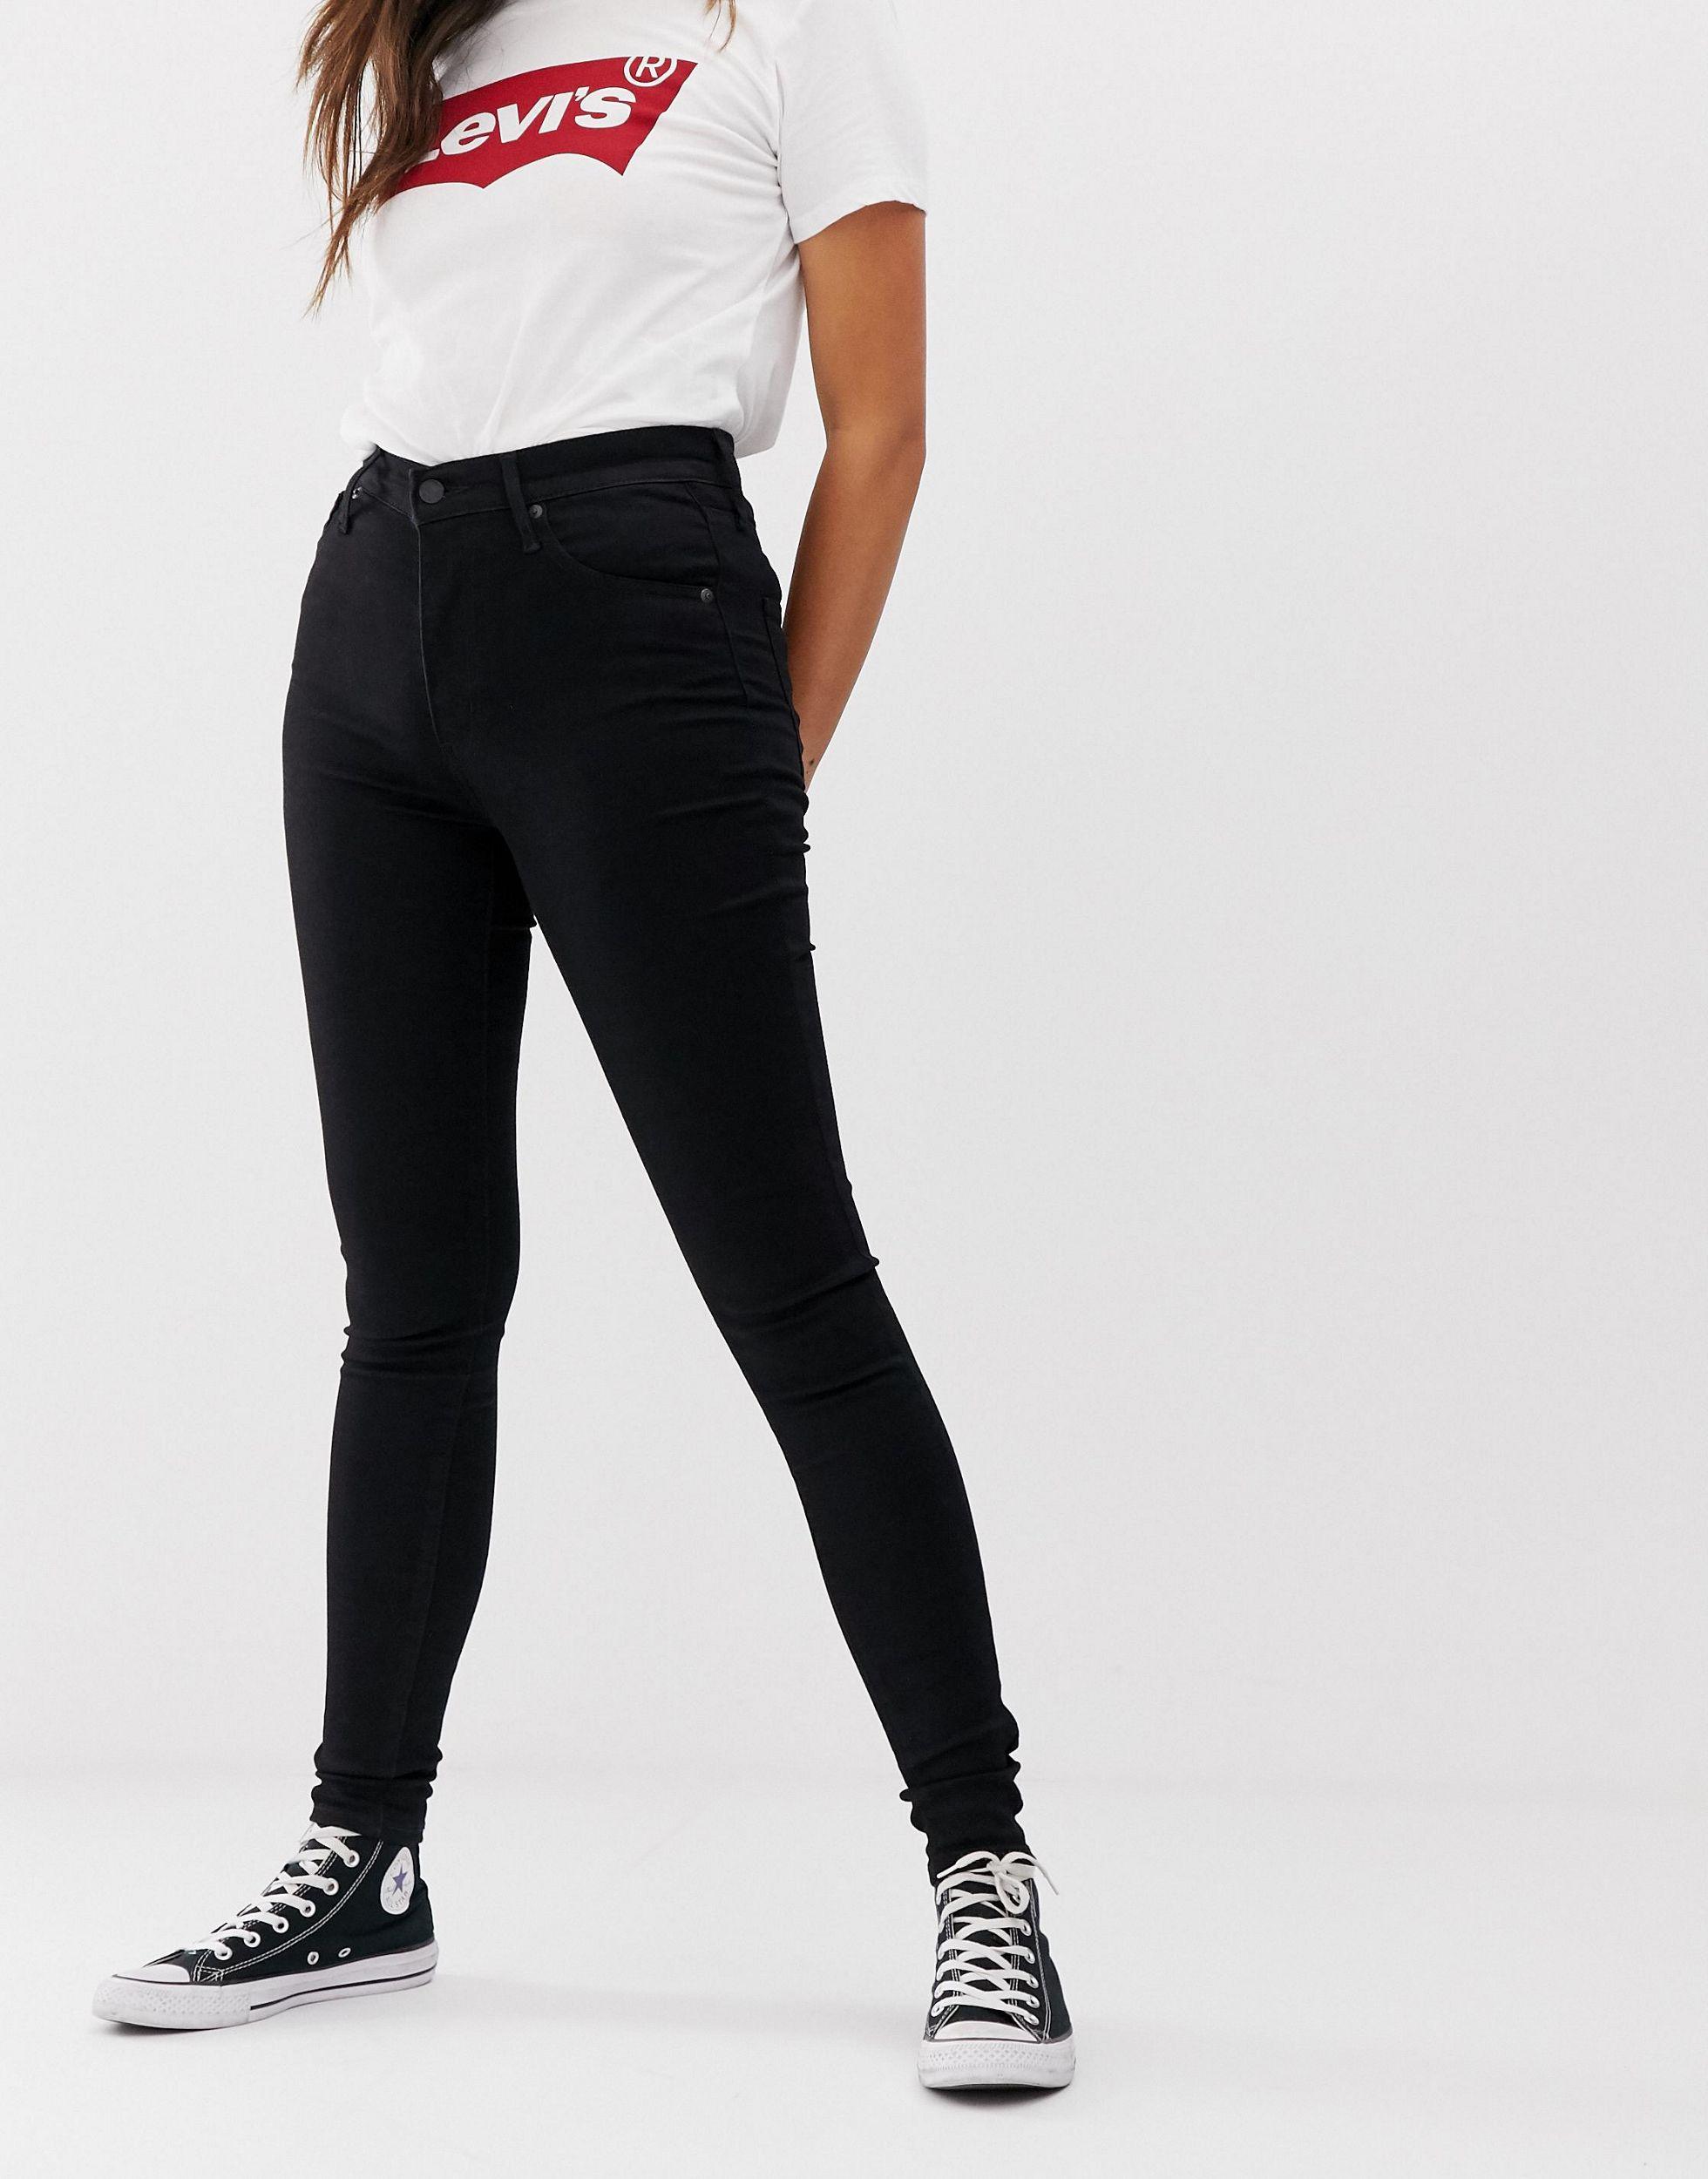 Levi's Mile High Super Skinny Jeans In Black Galaxy | Lyst Canada